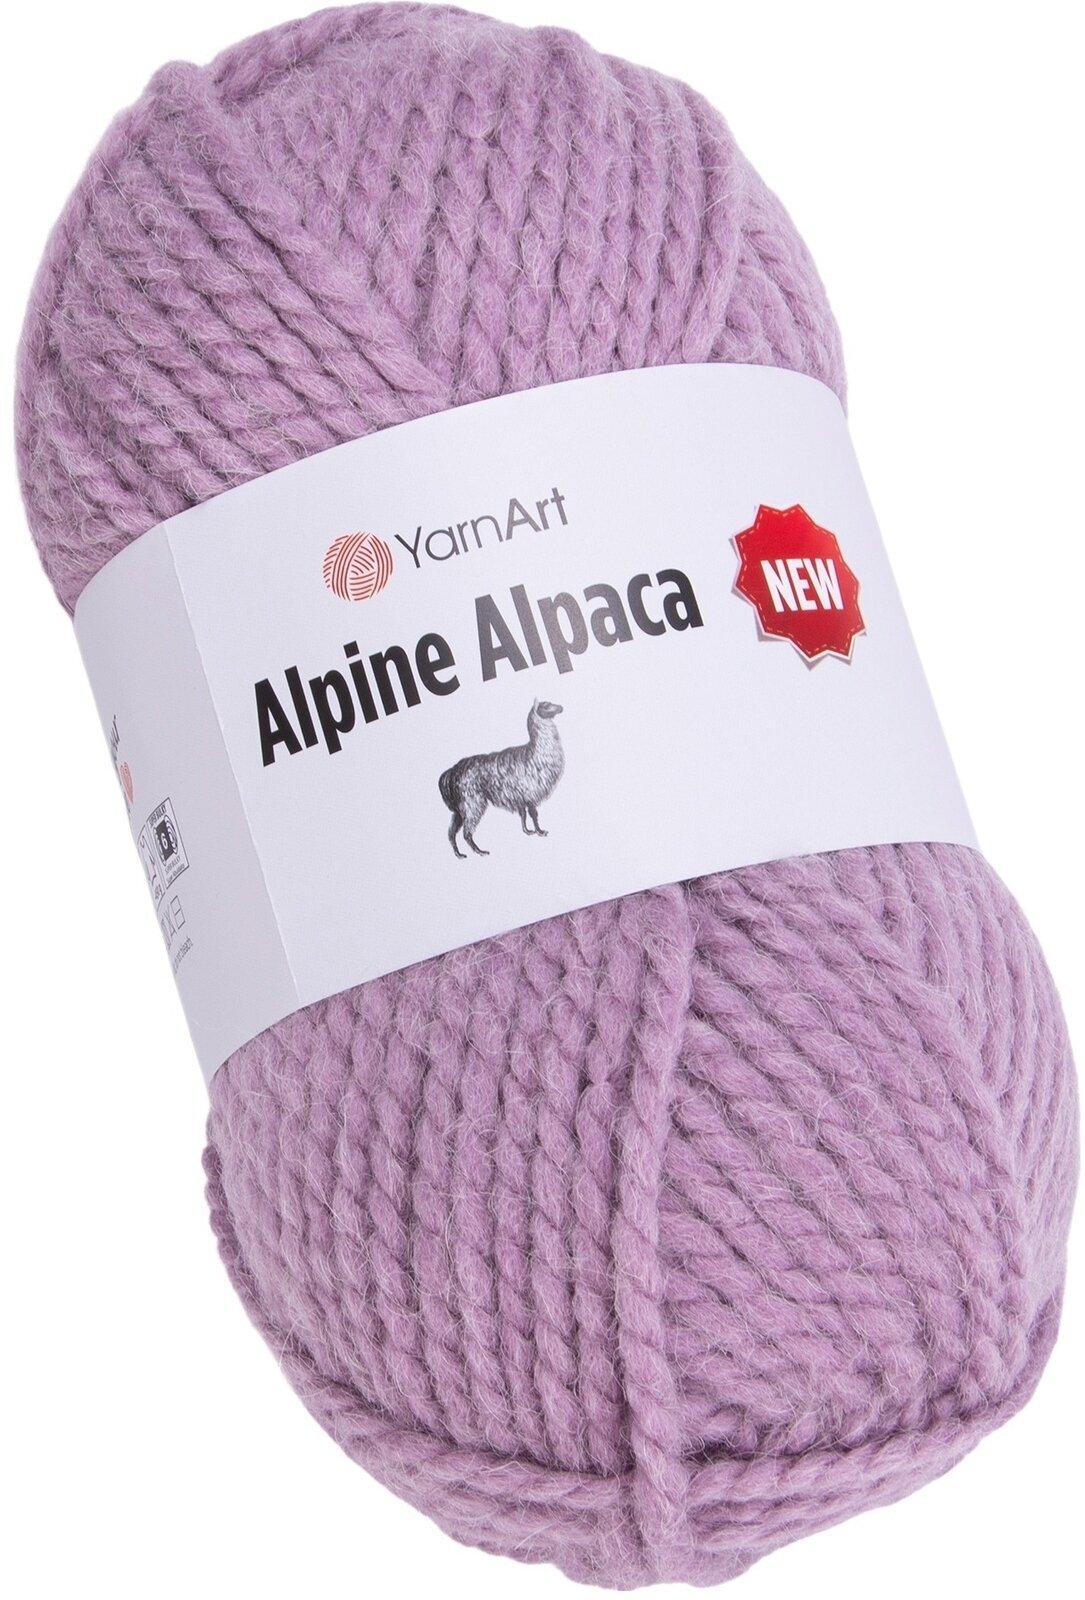 Strickgarn Yarn Art Alpine Alpaca 1443